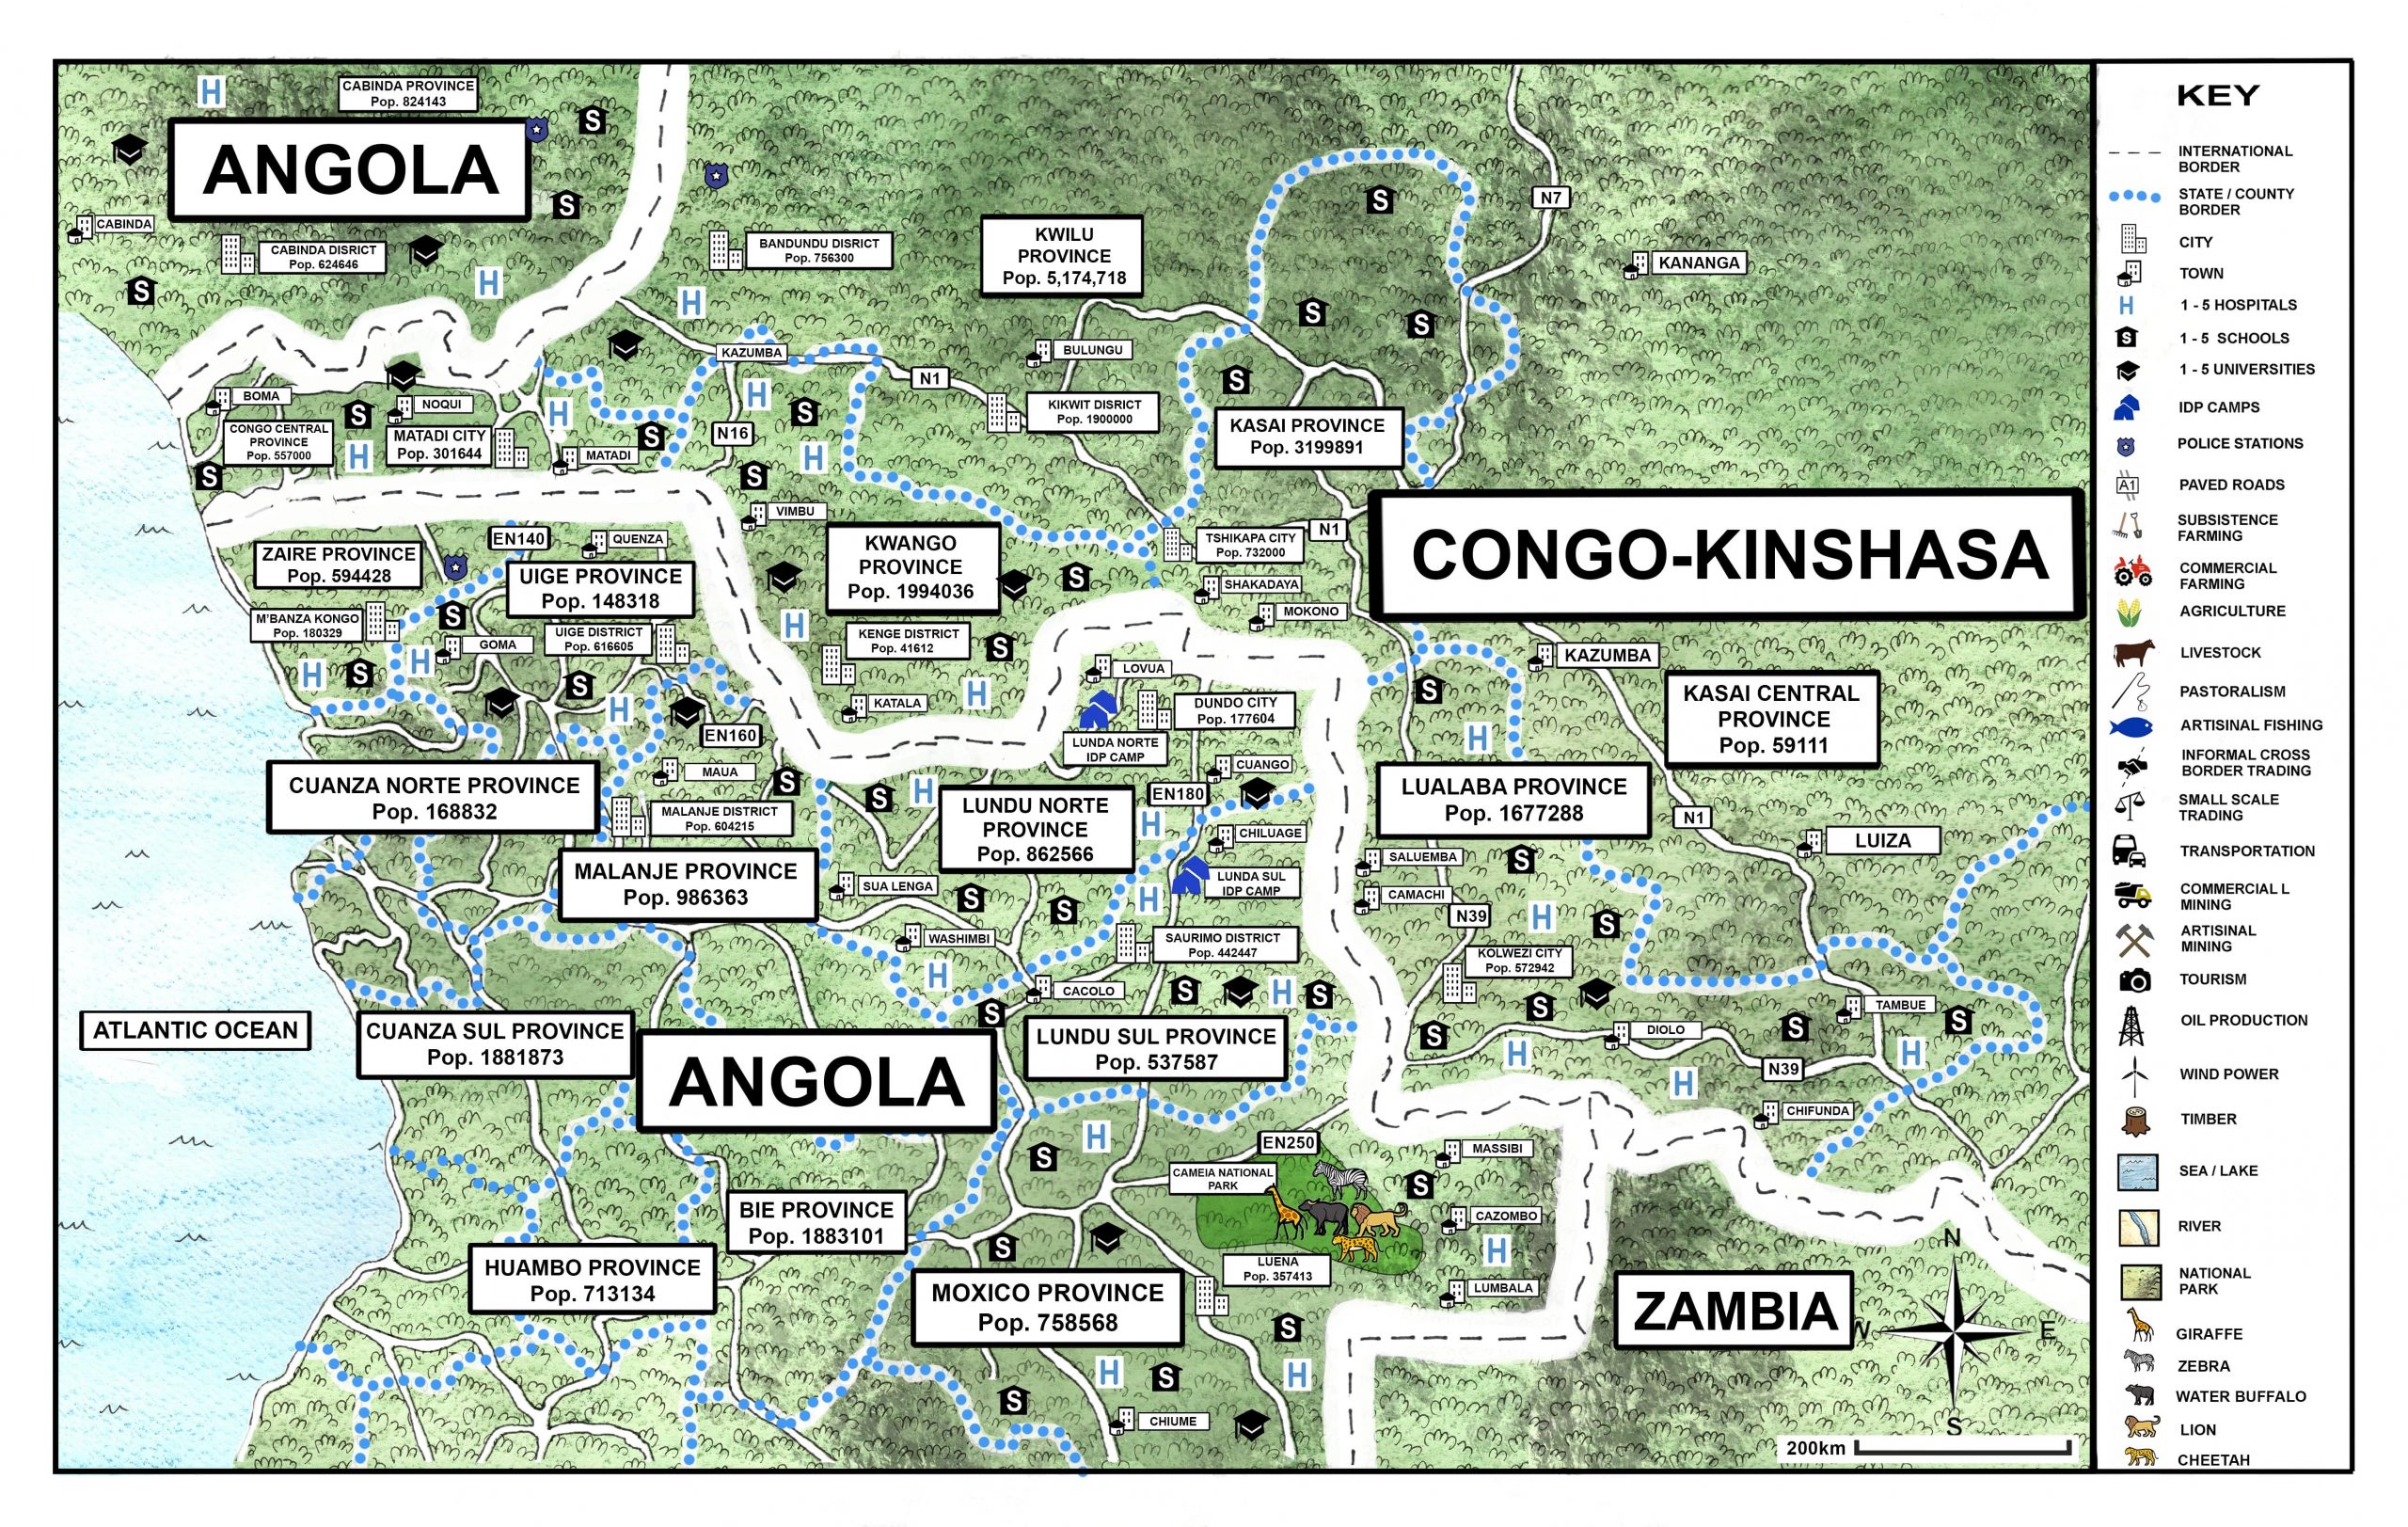 ANGOLA - CONGO KINSHASA_illustration